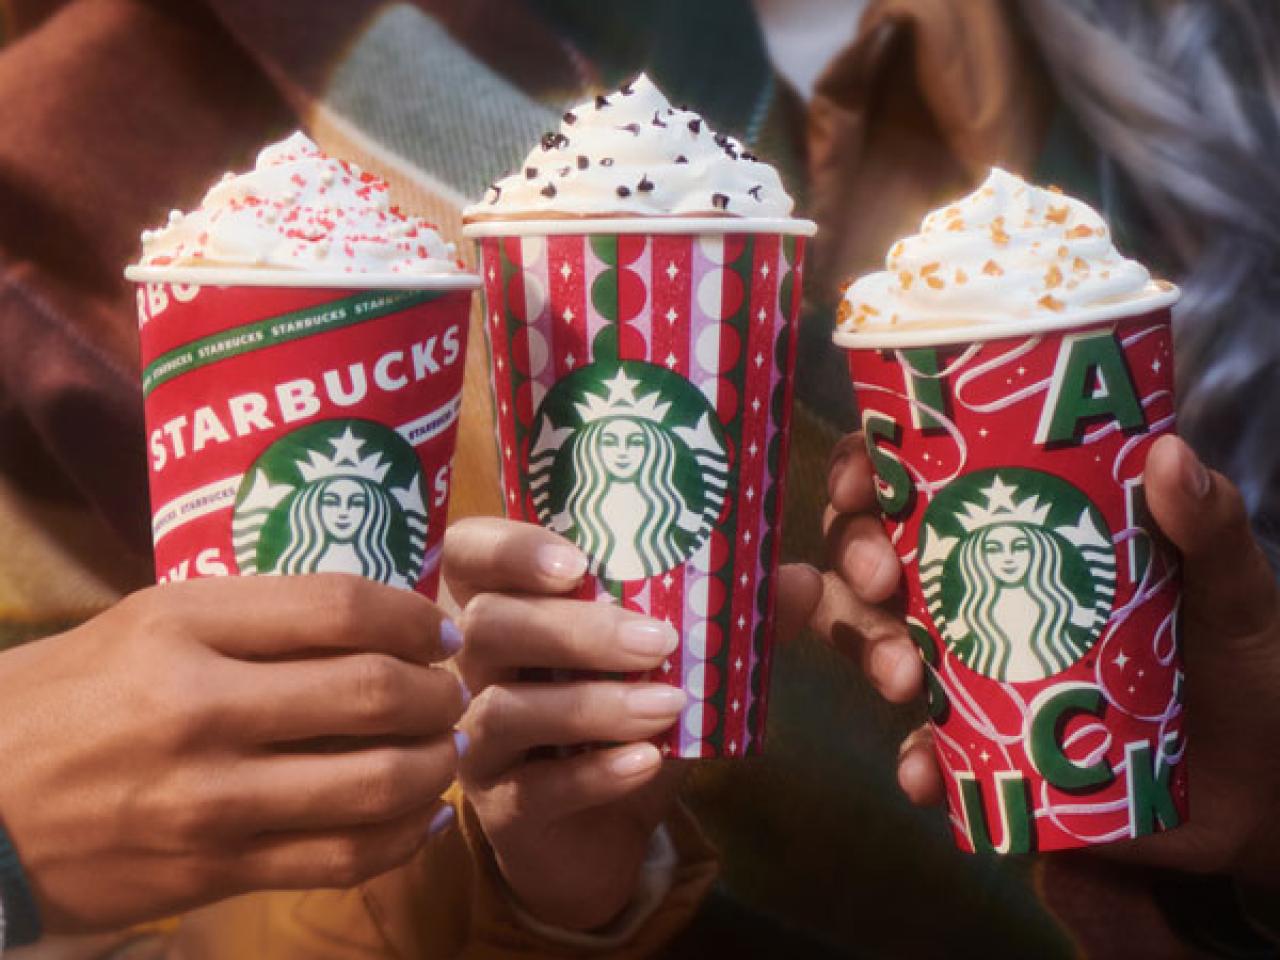 Starbucks Announces Sugar Cookie Latte New Starbucks Holiday Drink 2021 Fn Dish Behind